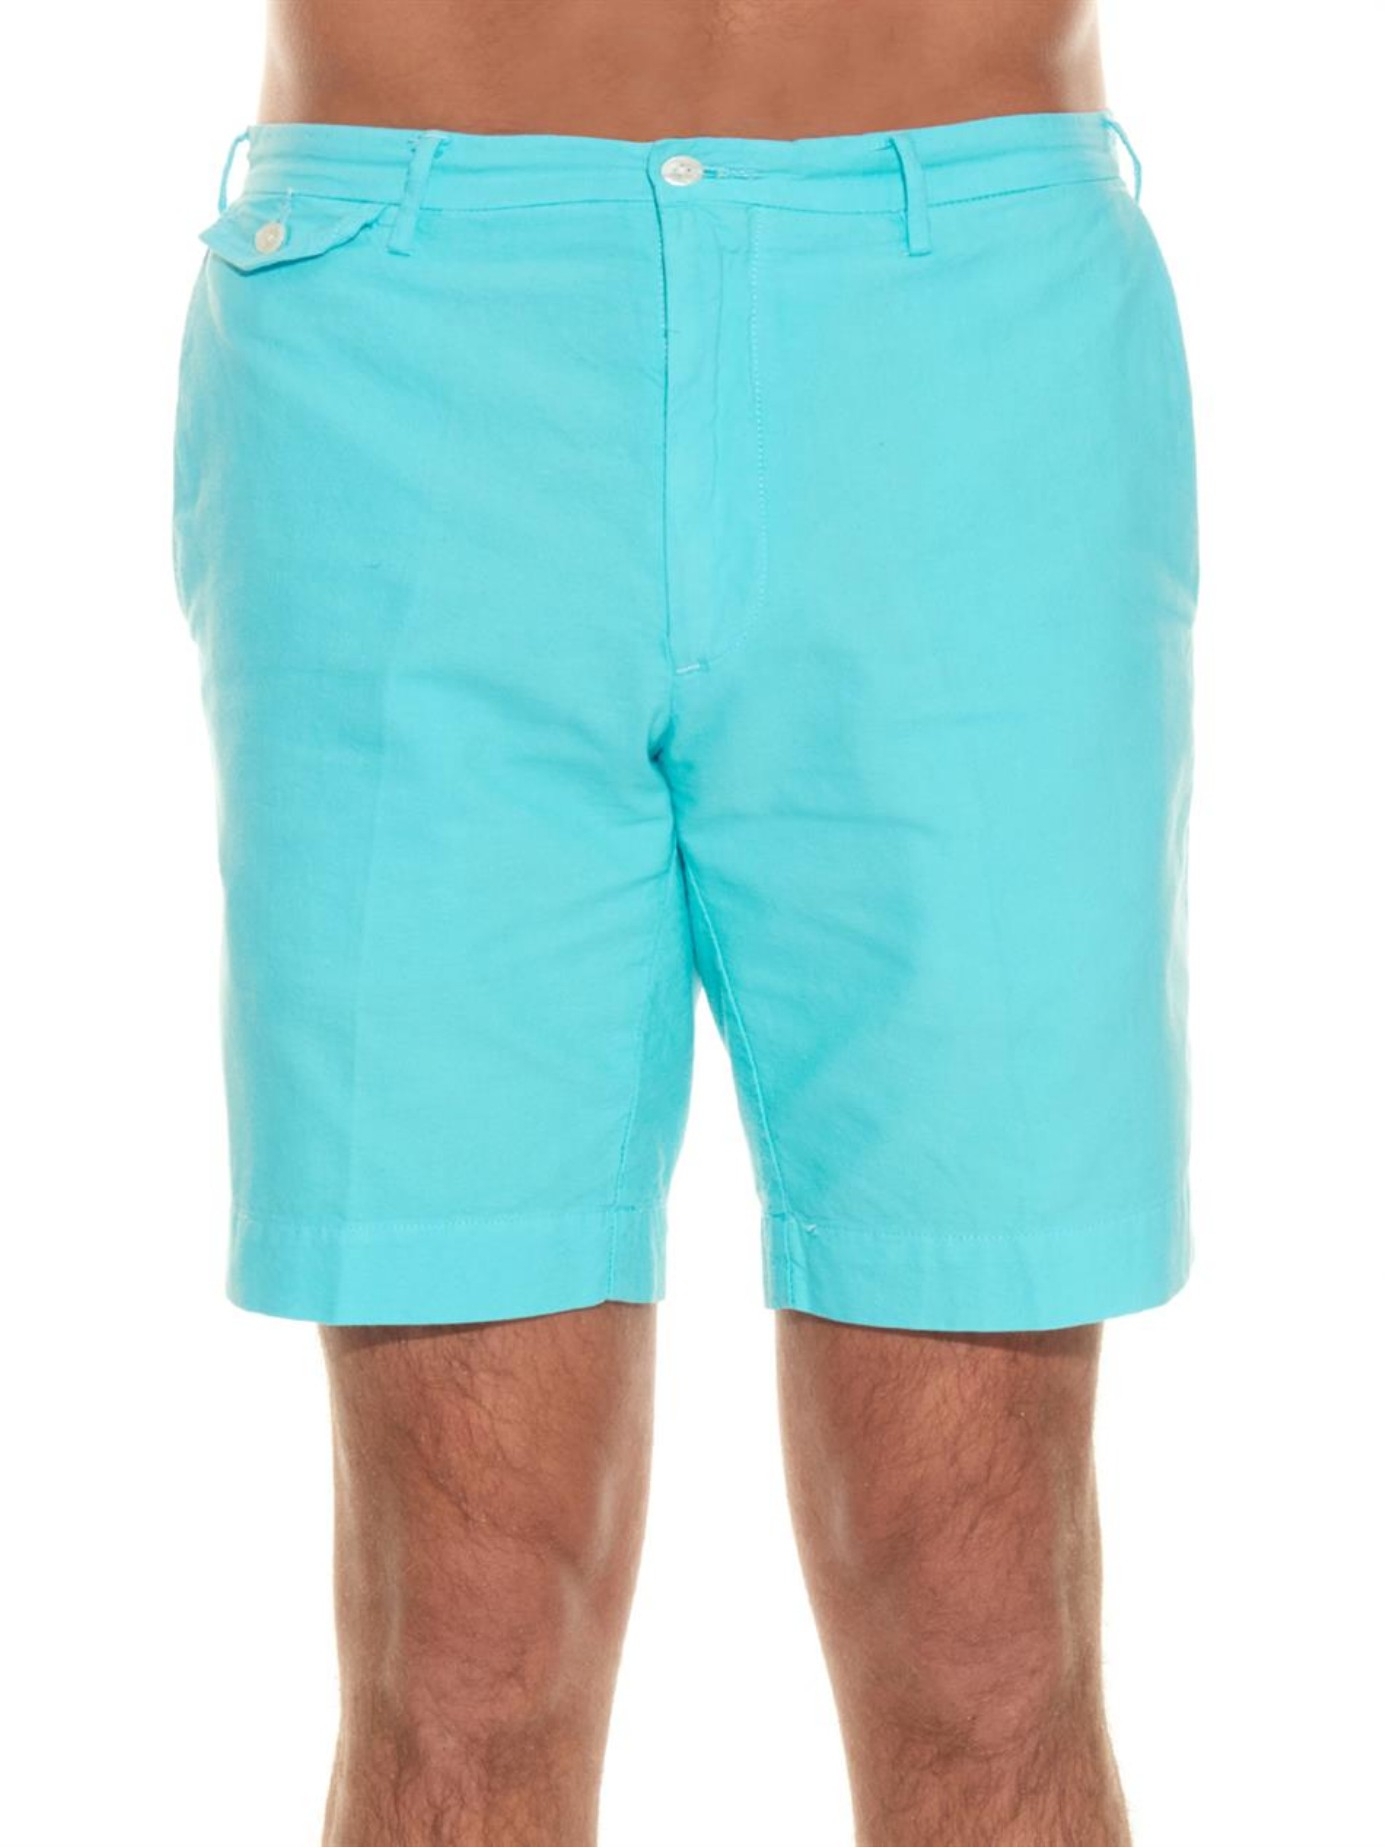 Lyst - Polo Ralph Lauren Hudson Chino Shorts in Blue for Men